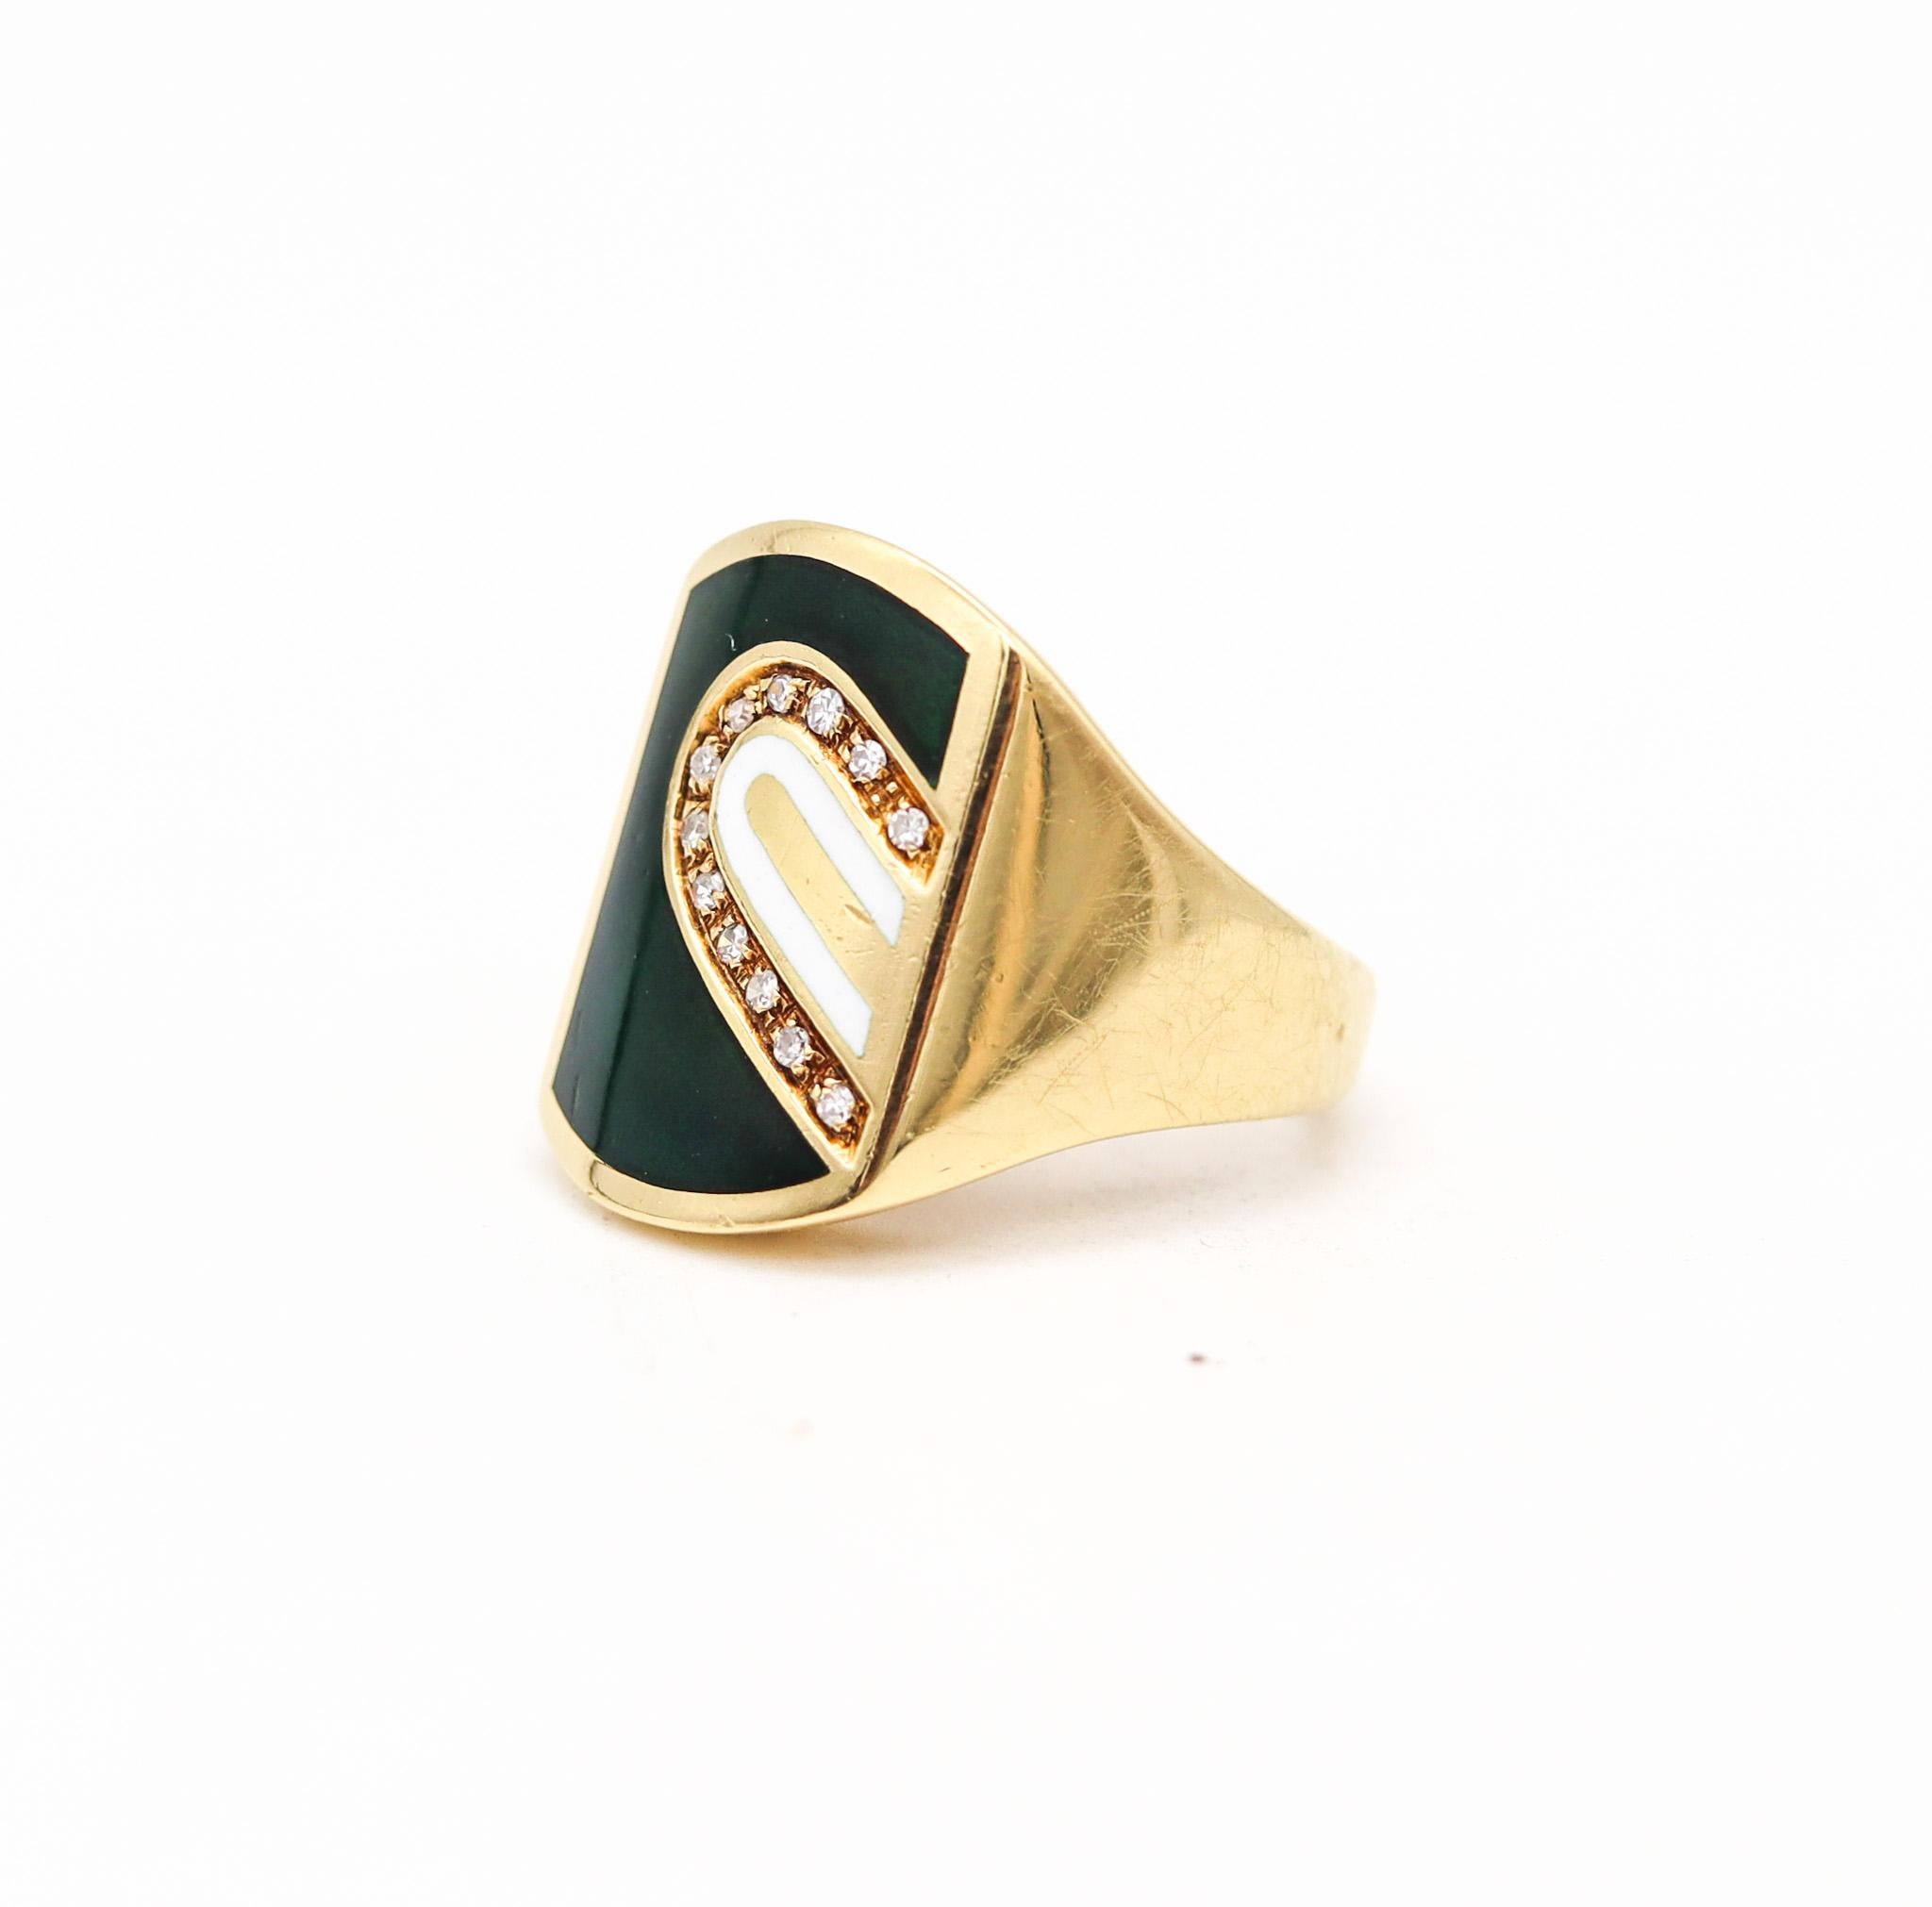 Women's or Men's Cartier 1970 Modernist Enameled Signet Ring in 18 Karat Gold with Diamonds